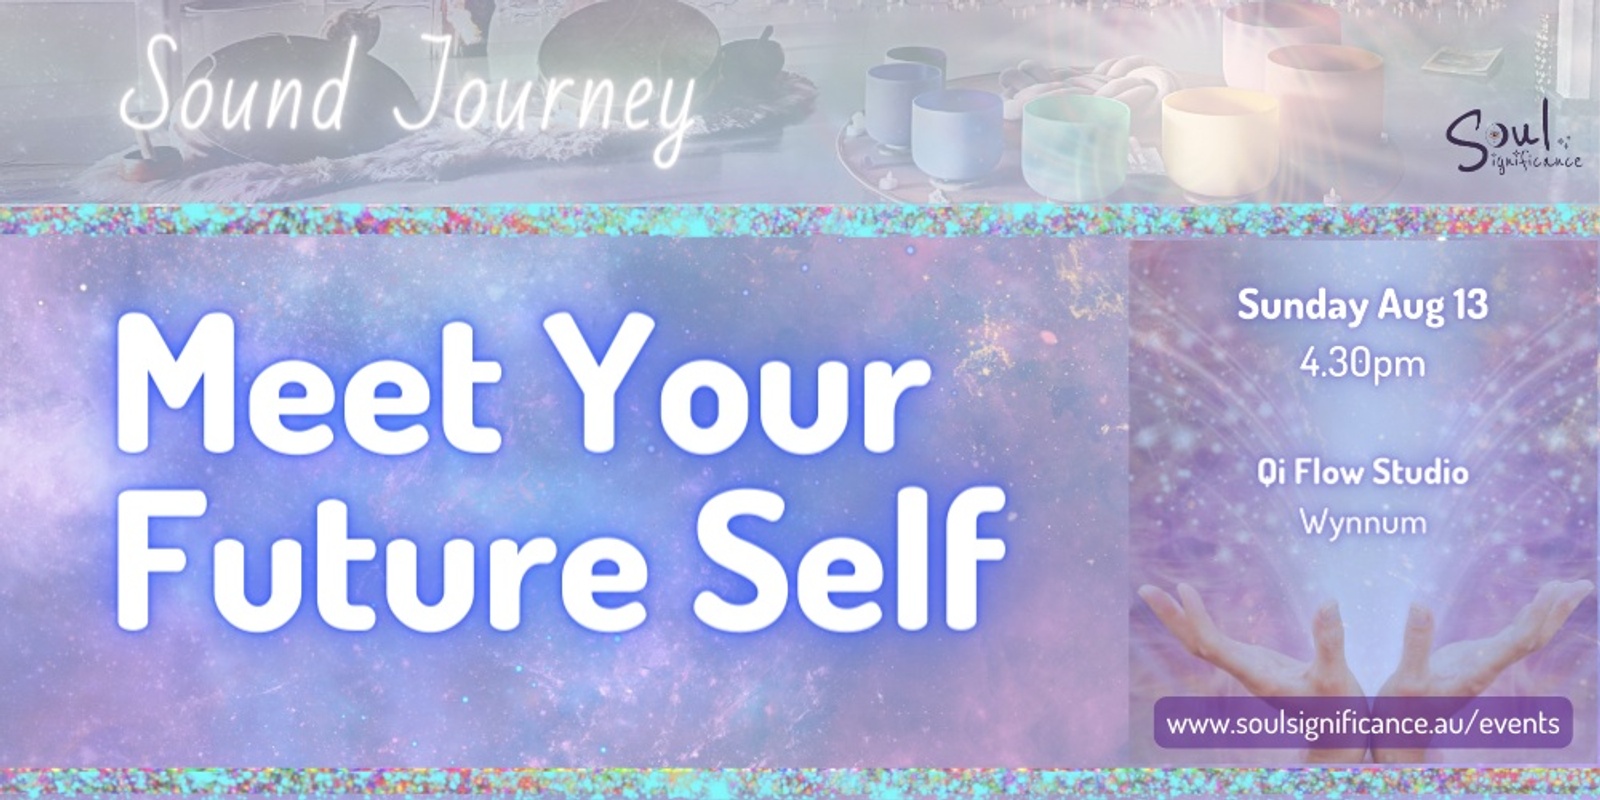 A Spiritual Sound Journey - Meet Your Future Self